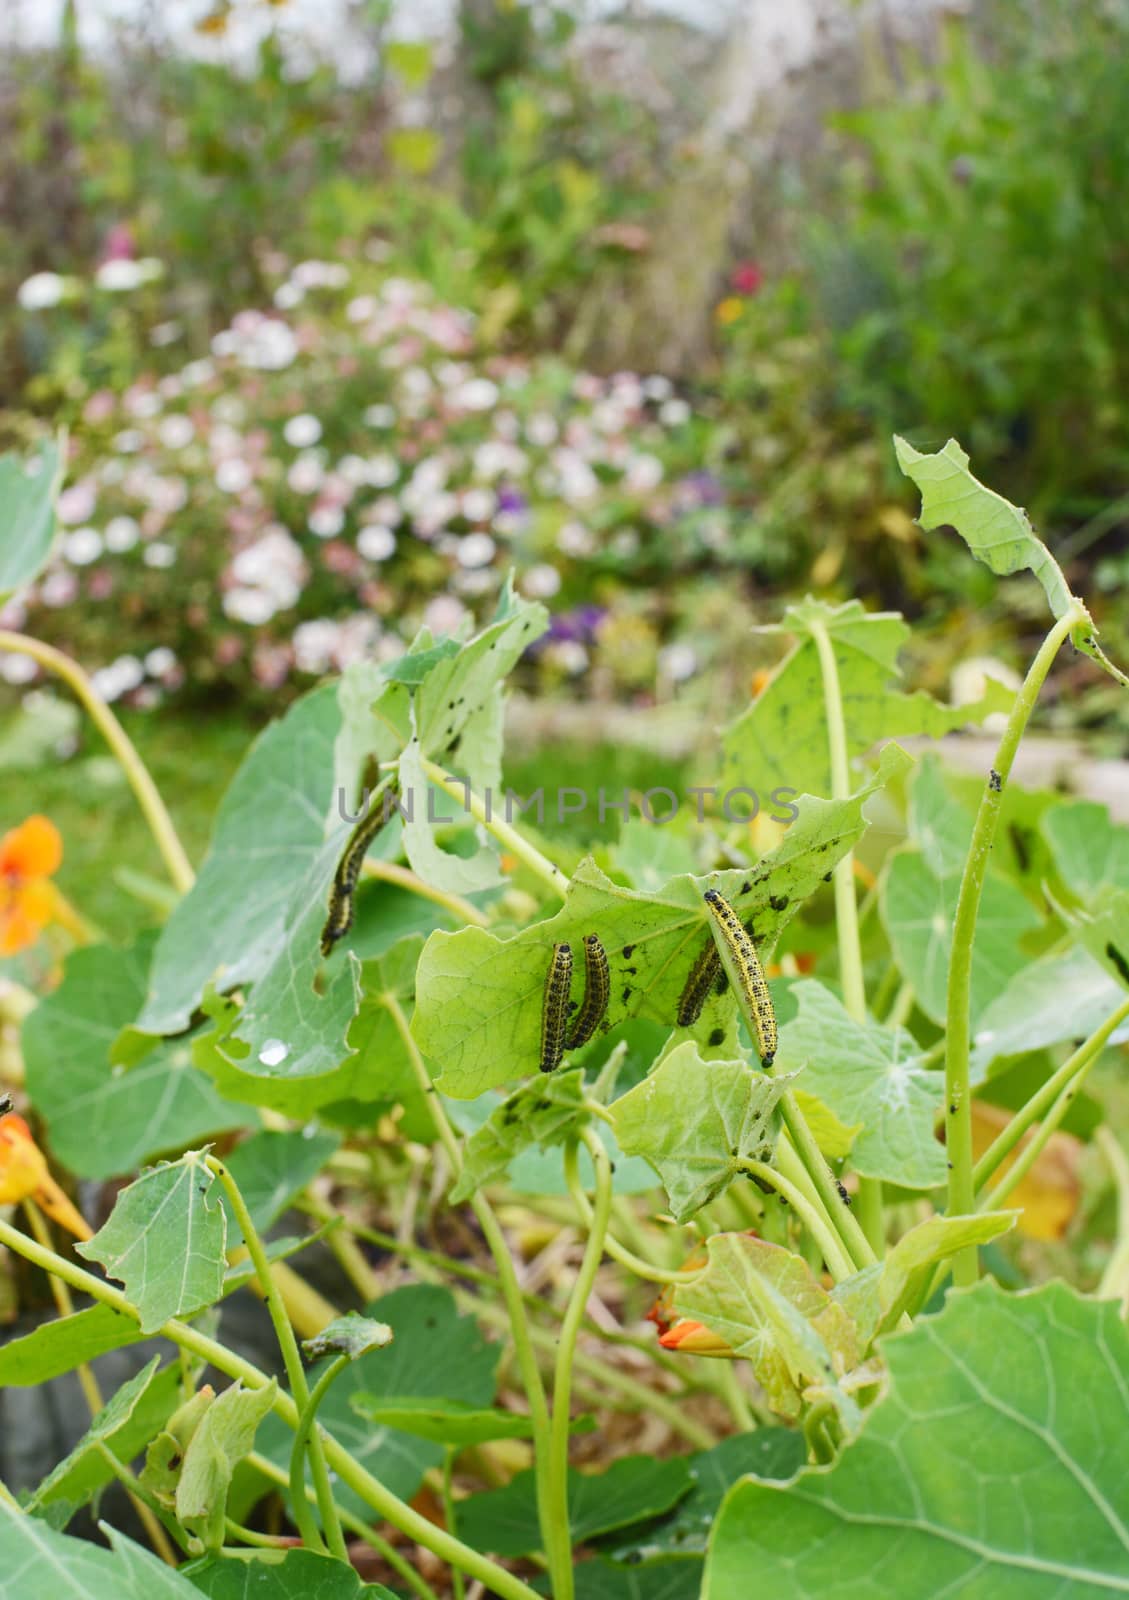 Many cabbage white caterpillars feeding on foliage by sarahdoow